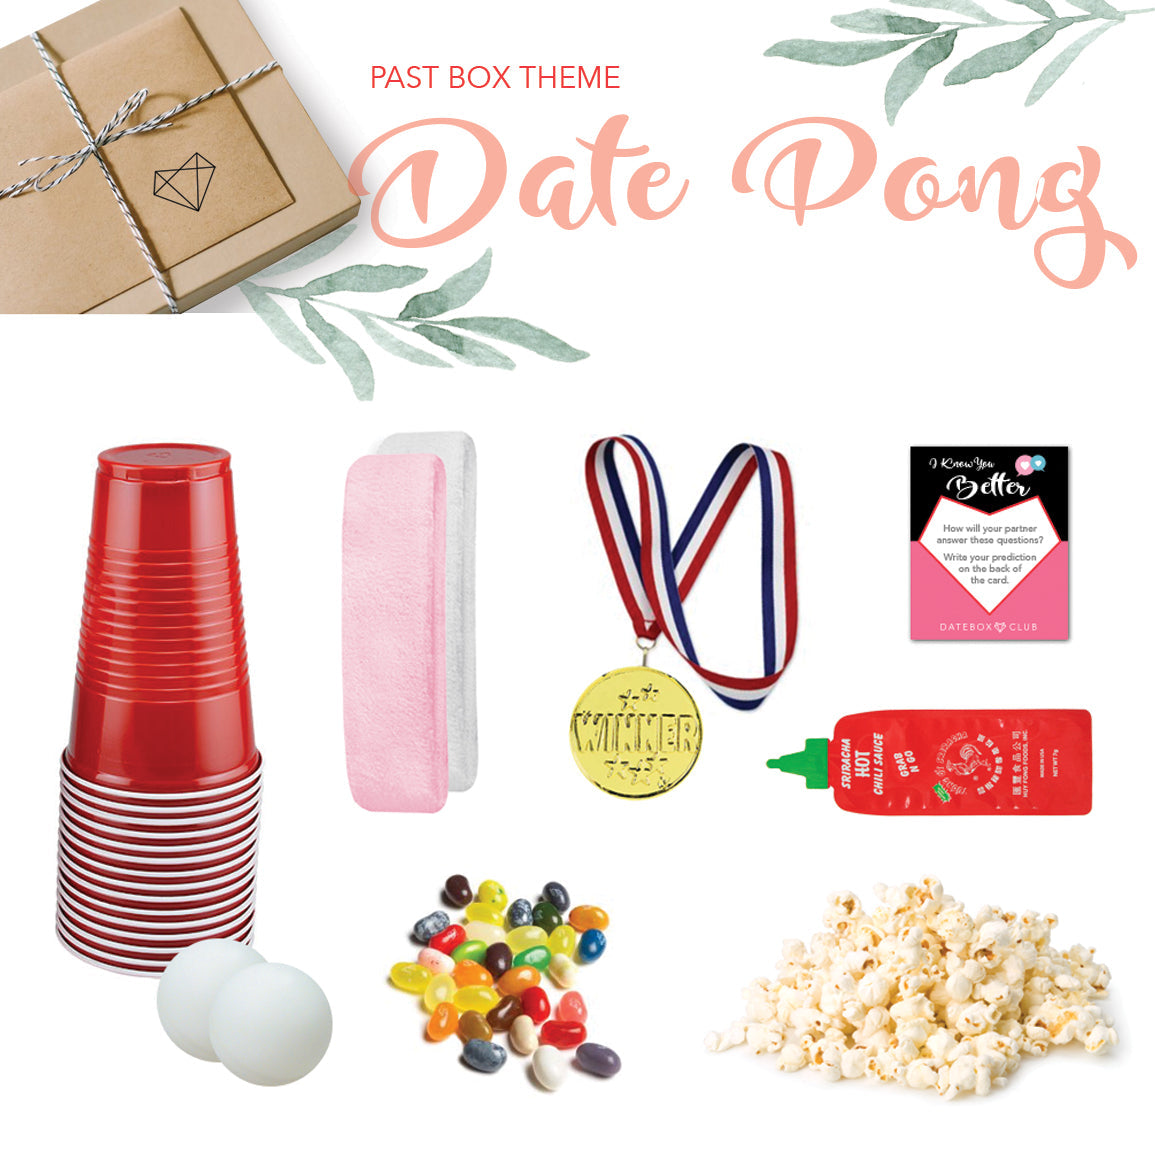 Past DateBox - DatePong Theme